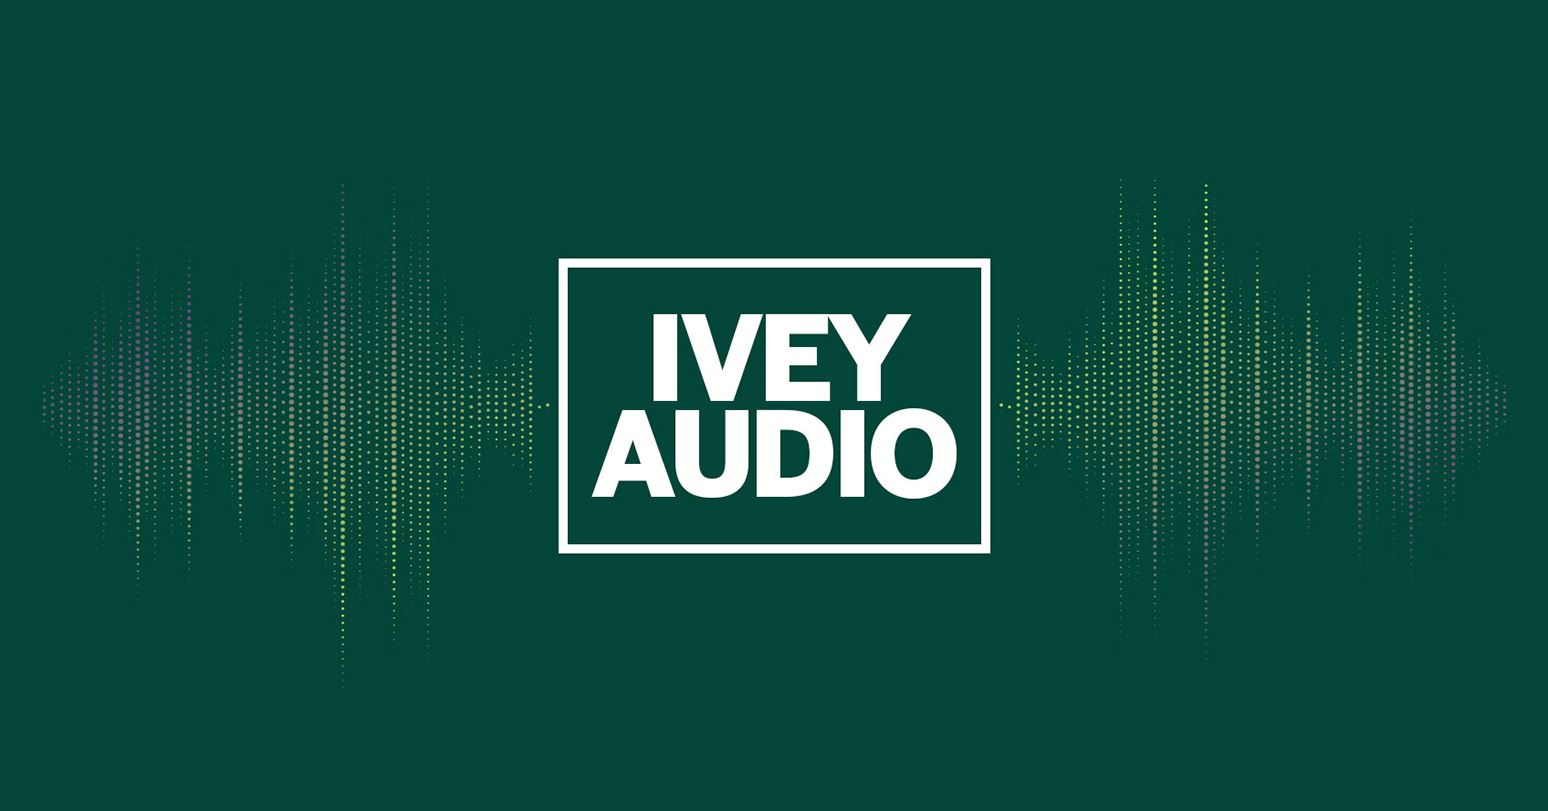 Ivey audio banner